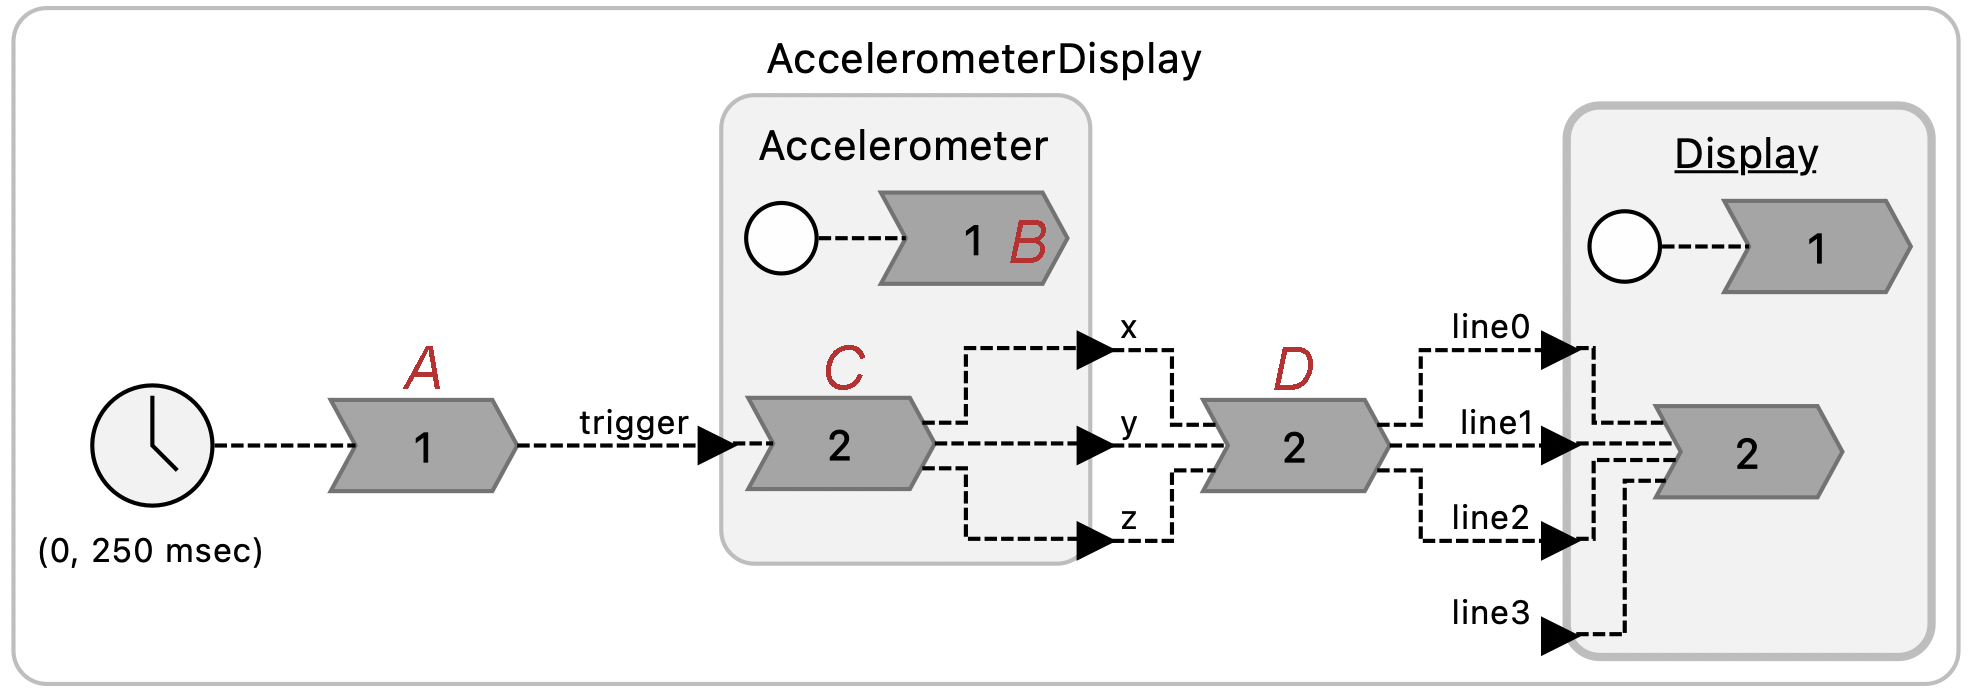 AccelerometerDisplay diagram